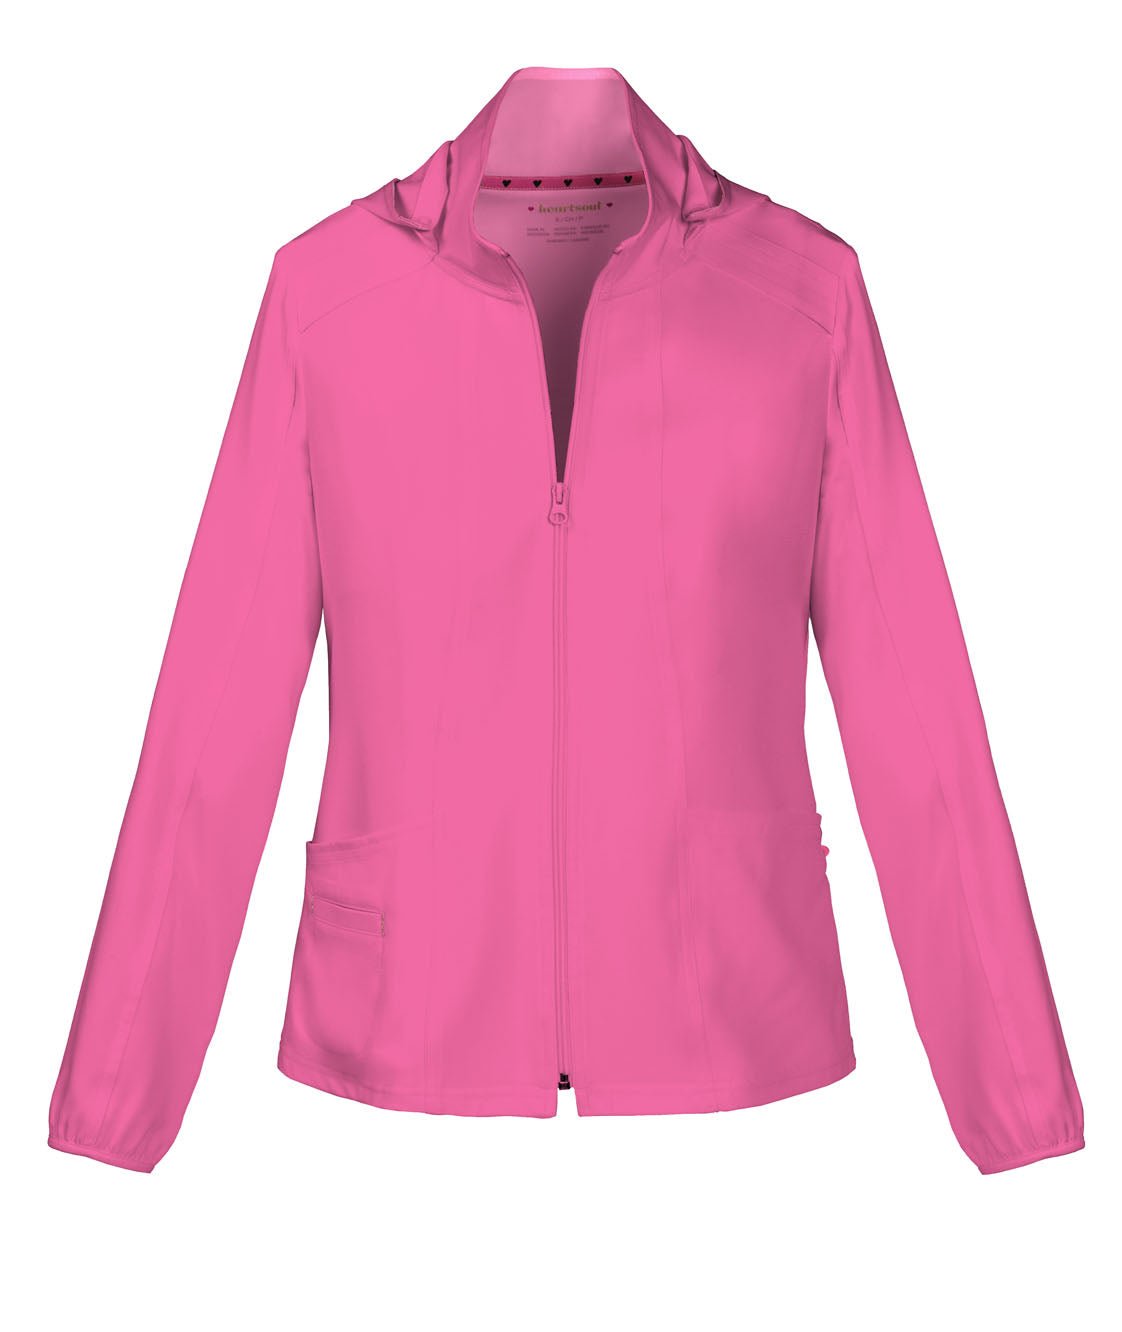 HeartSoul Warm Up Jacket 20310 Ciel, Pink, Royal - Scrubs Select